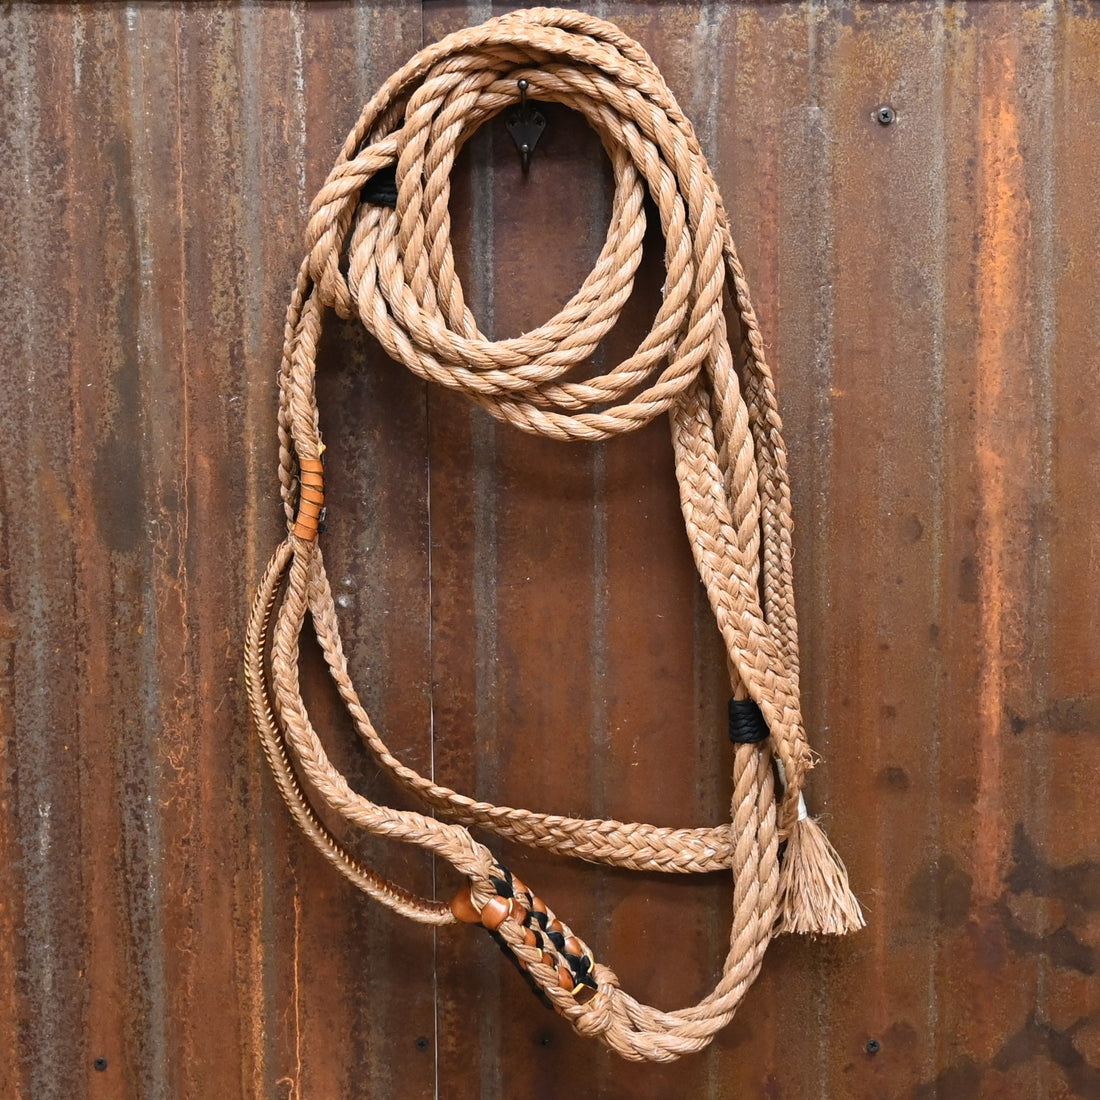 Barstow Pro Rodeo Custom Bull Rope 9/7 view of rope